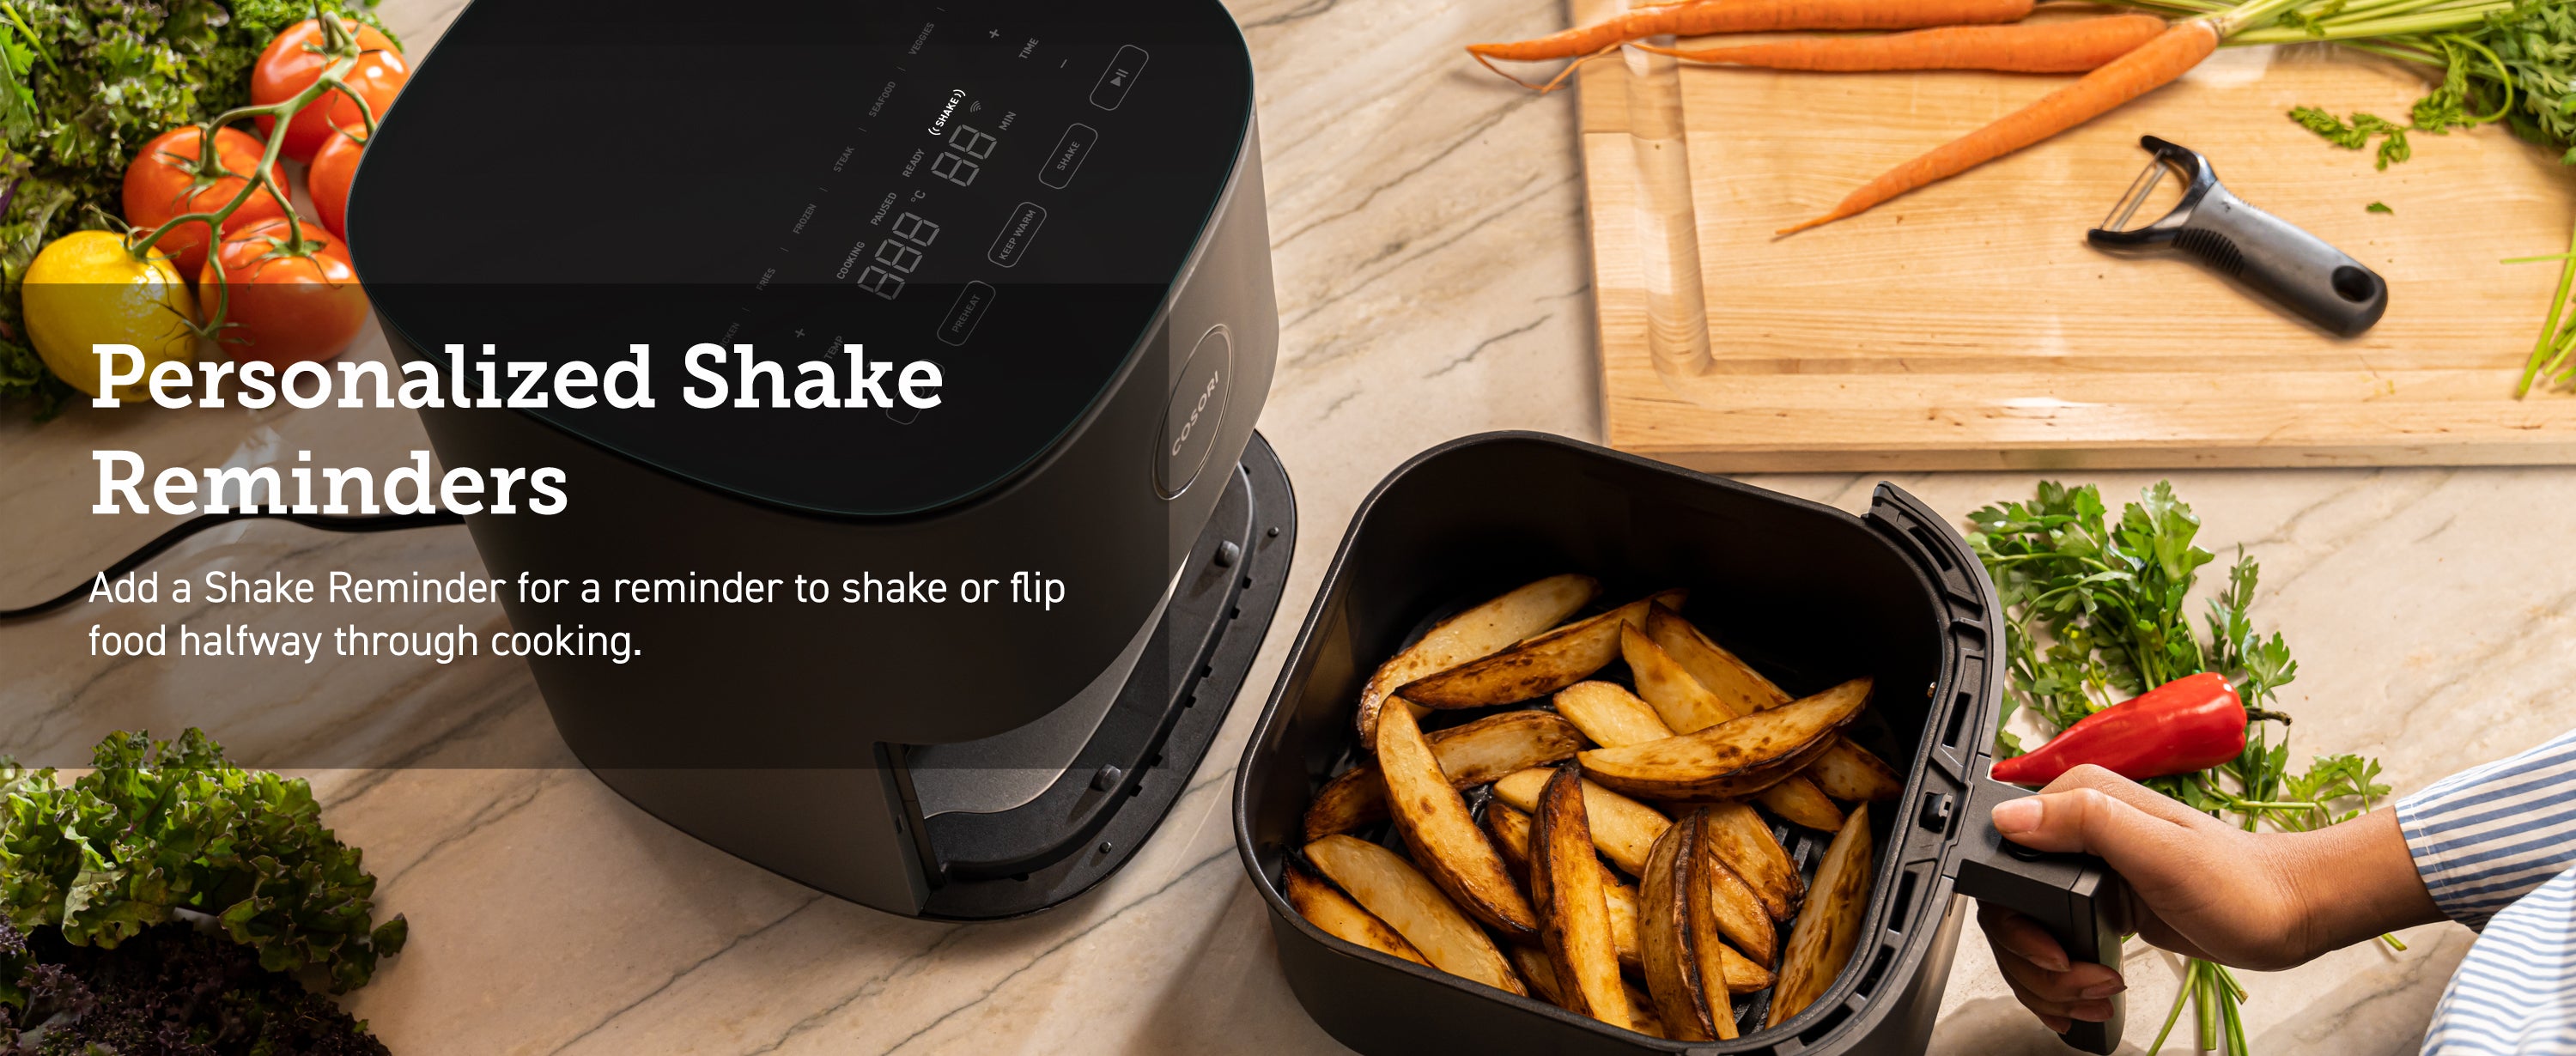 Personalized Shake Reminders Add a Shake Reminder for a reminder to shake or flip food halfway through cooking.